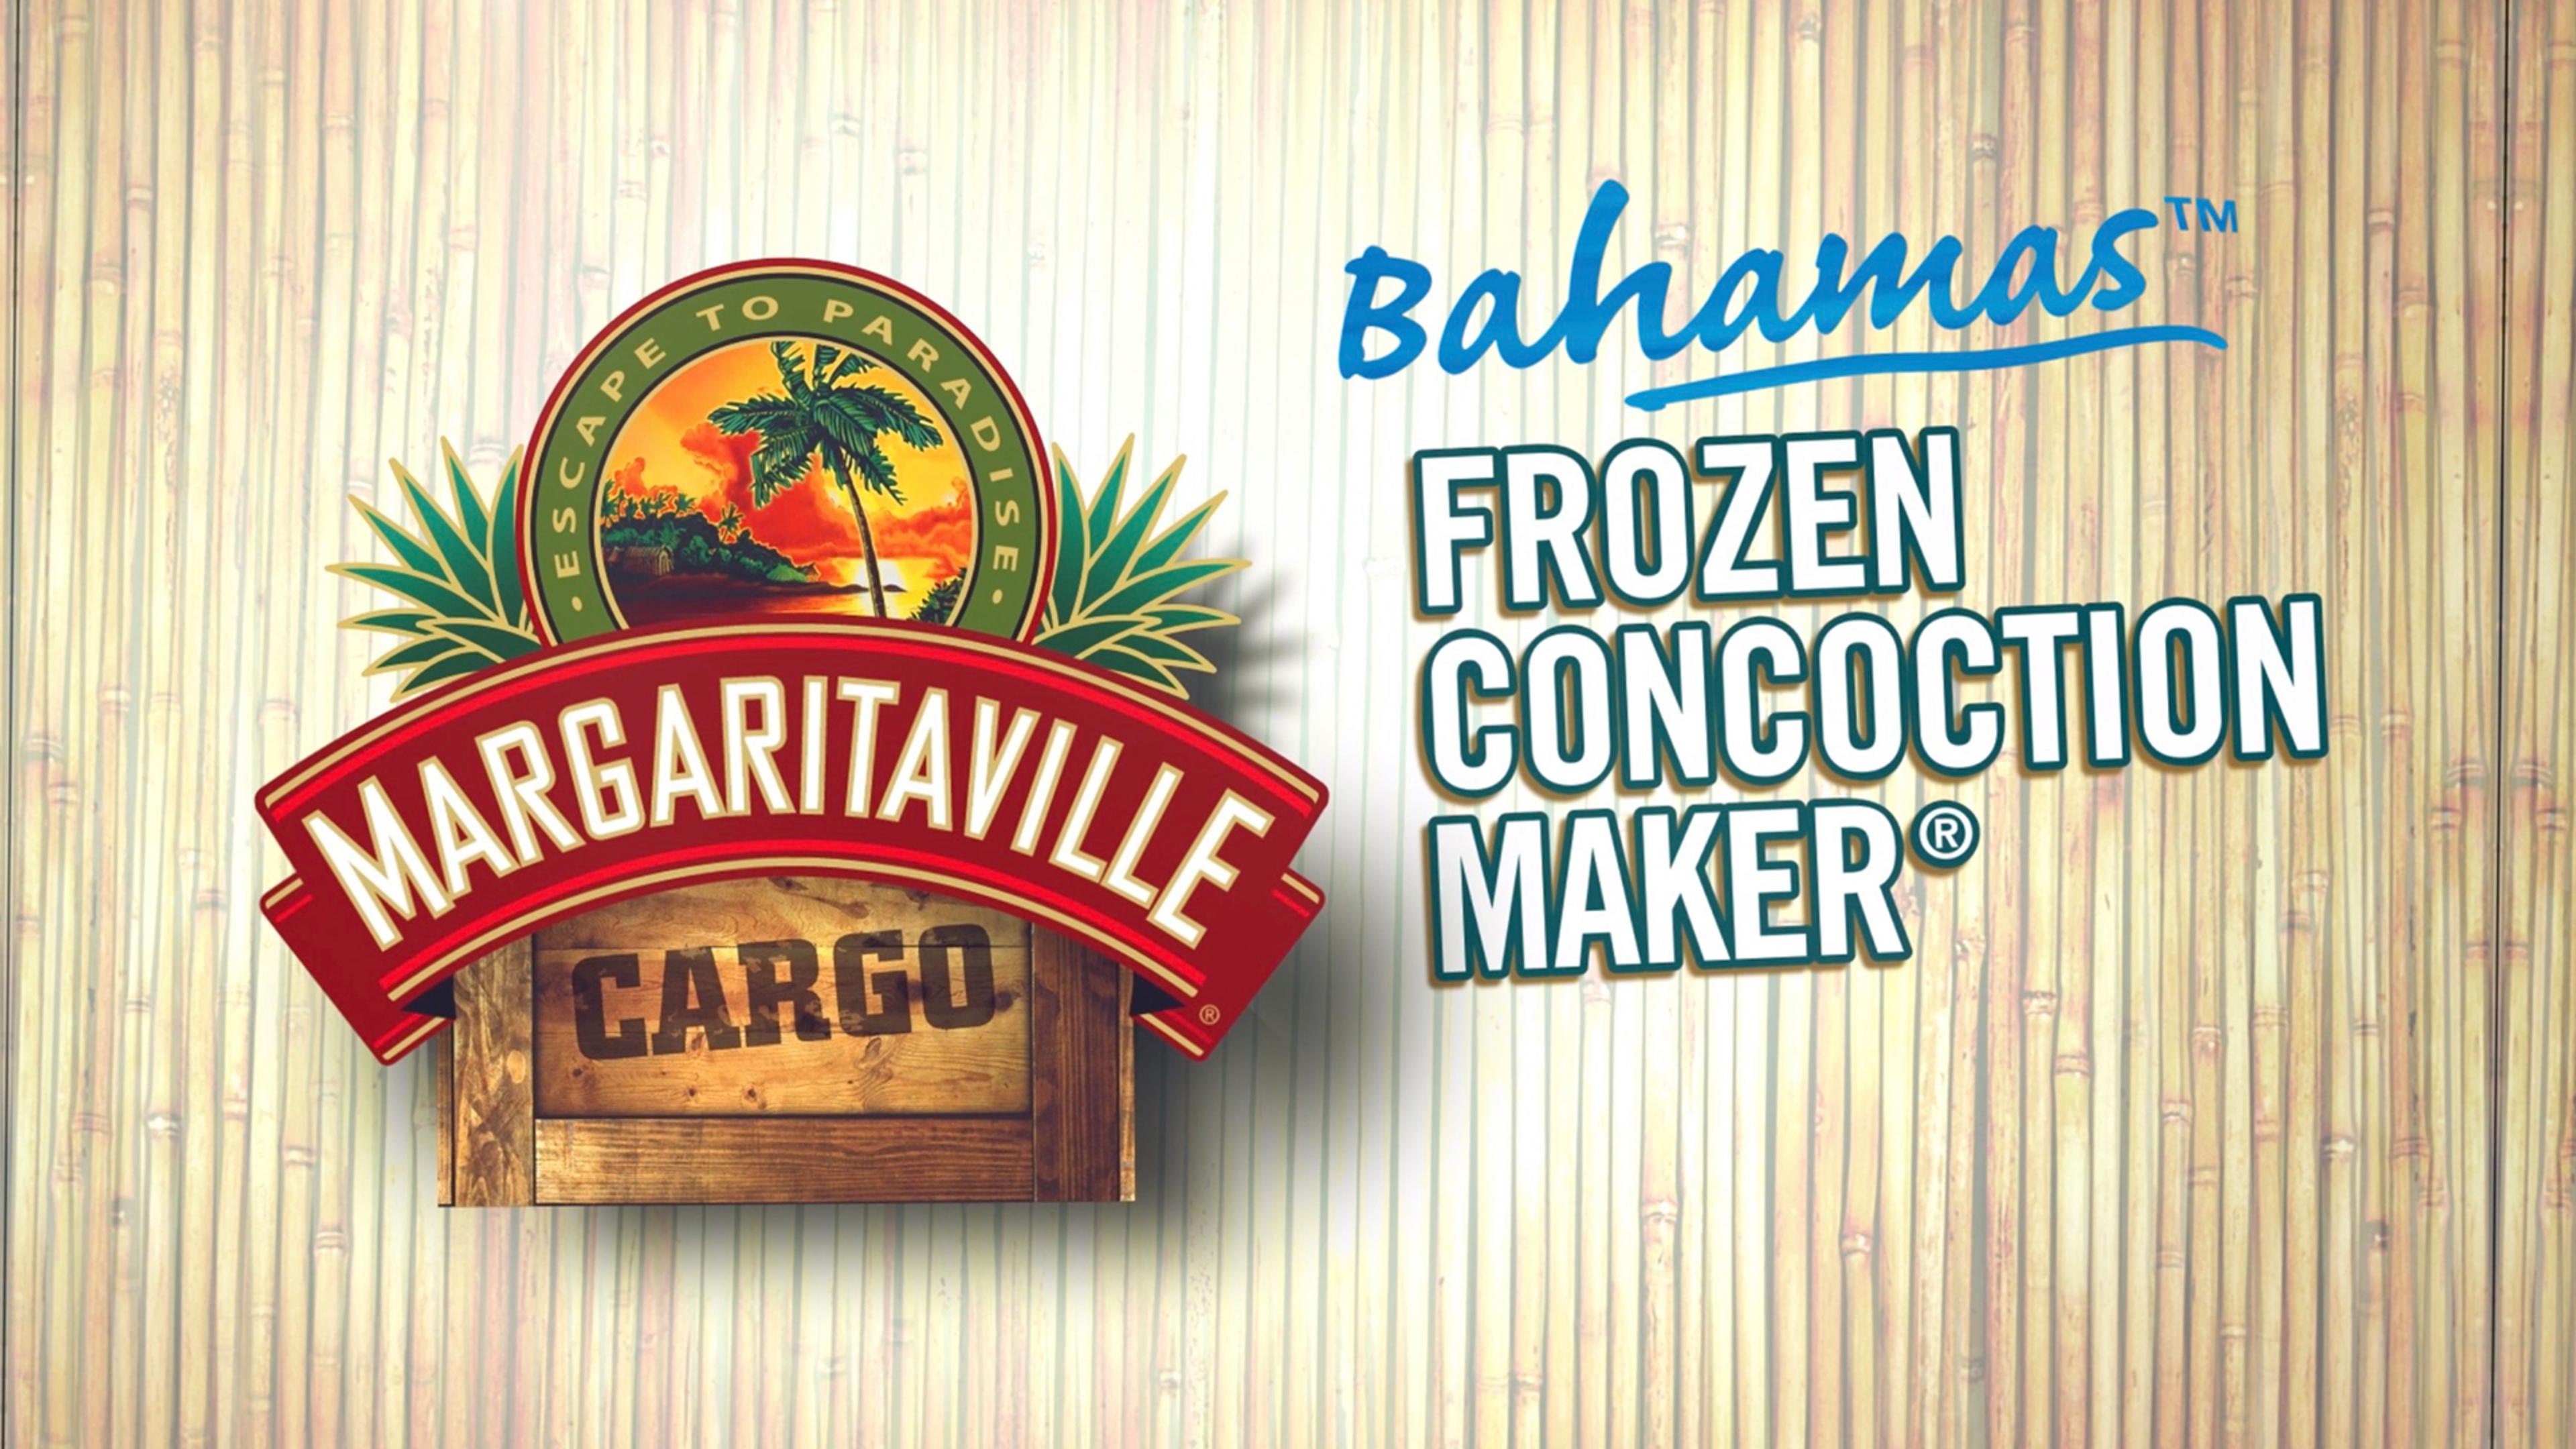 Margaritaville Bahamas Frozen Drink Machine & Concoction Maker - image 8 of 14